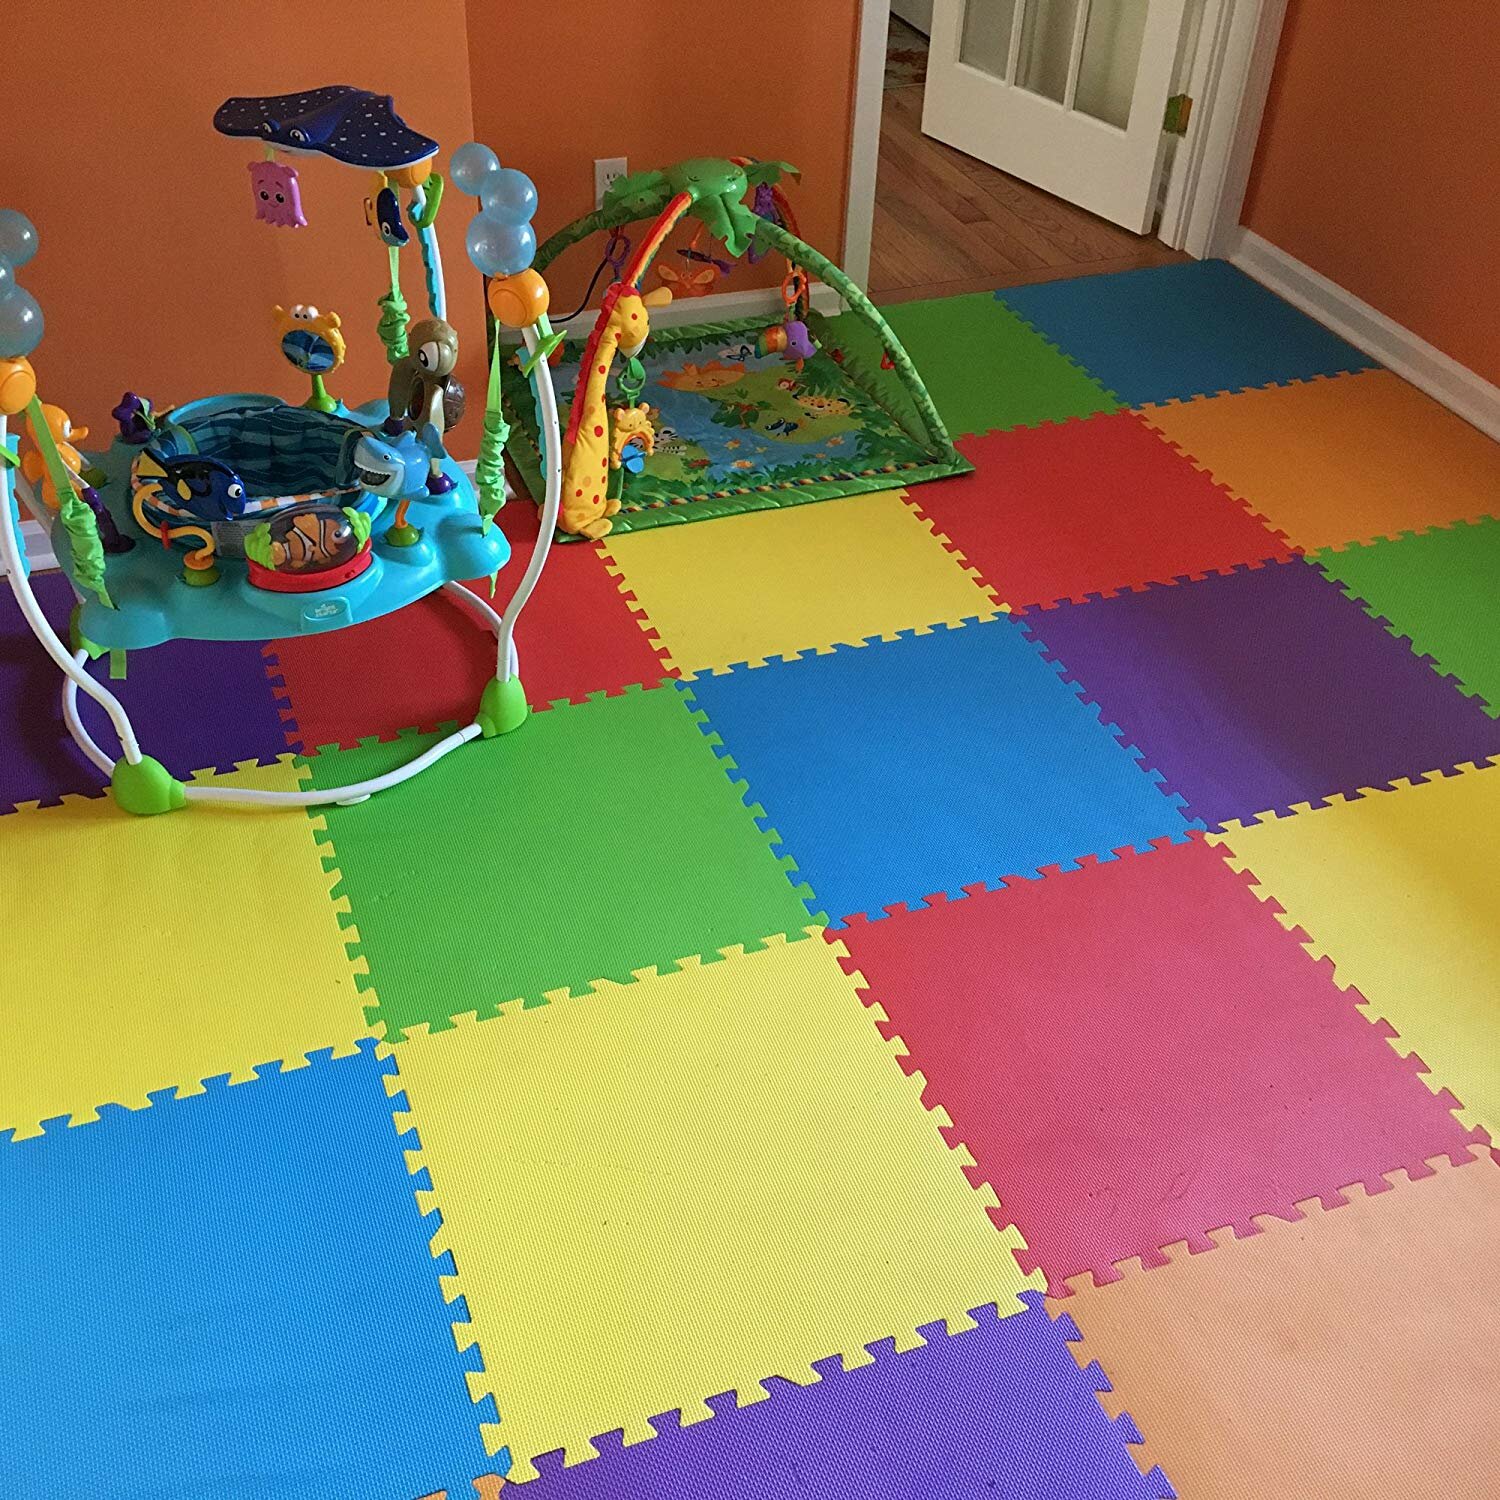 Turquoise 31 X 31 cm Eva Foam Mat Floor Tiles Interlocking Play Kids Baby Mats 